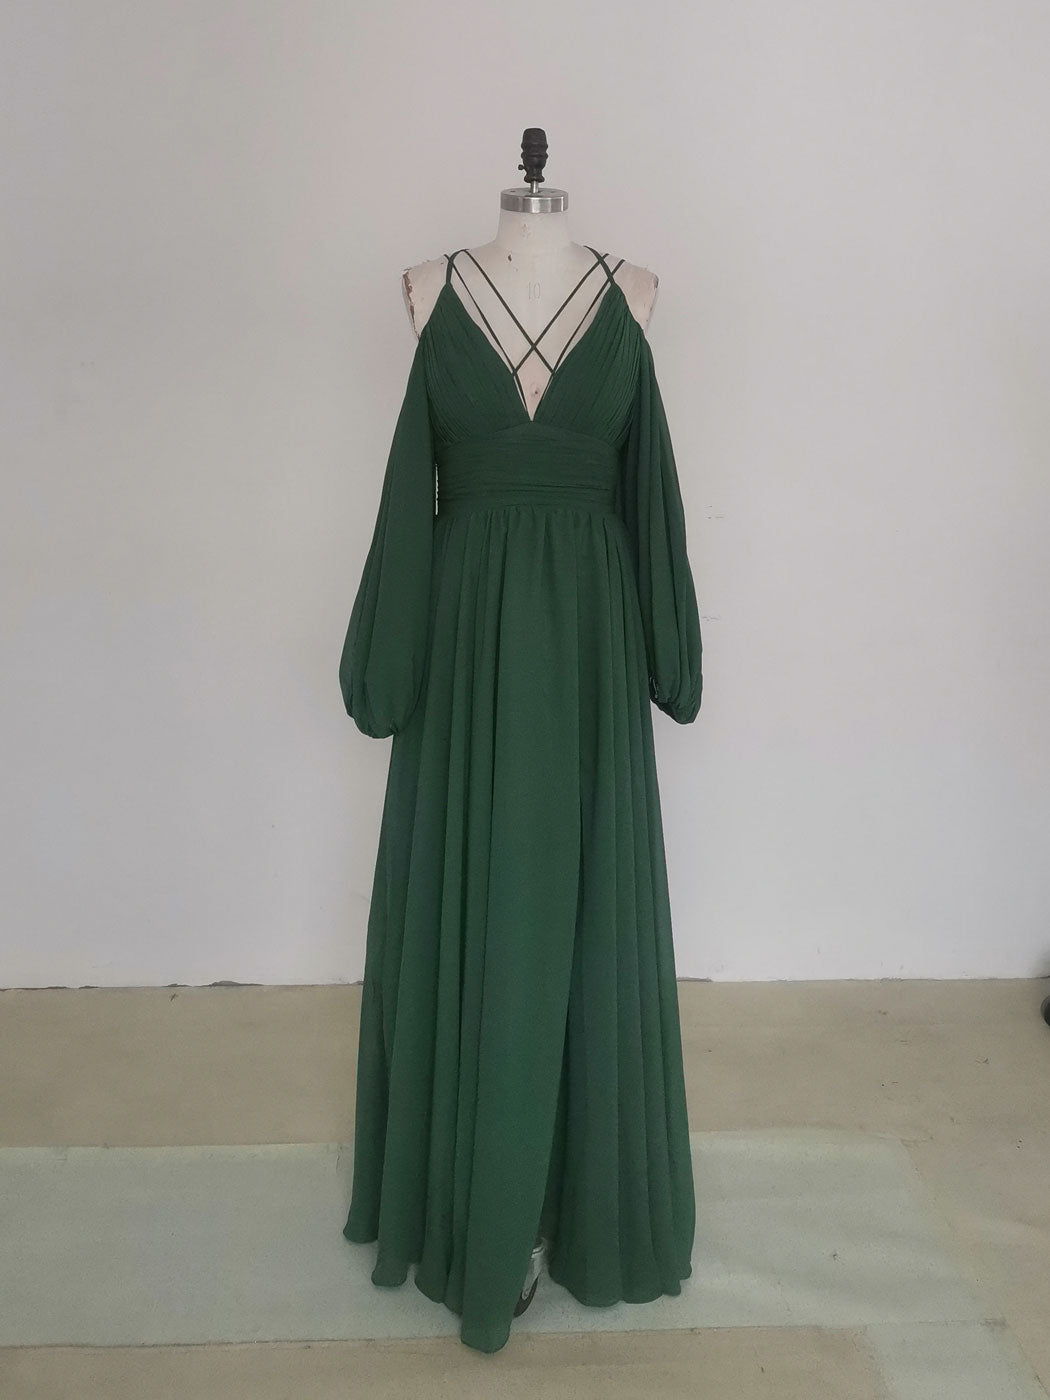 Dress Casual, Simple A line Green Chiffon Long Prom Dress, Green Bridesmaid Dress